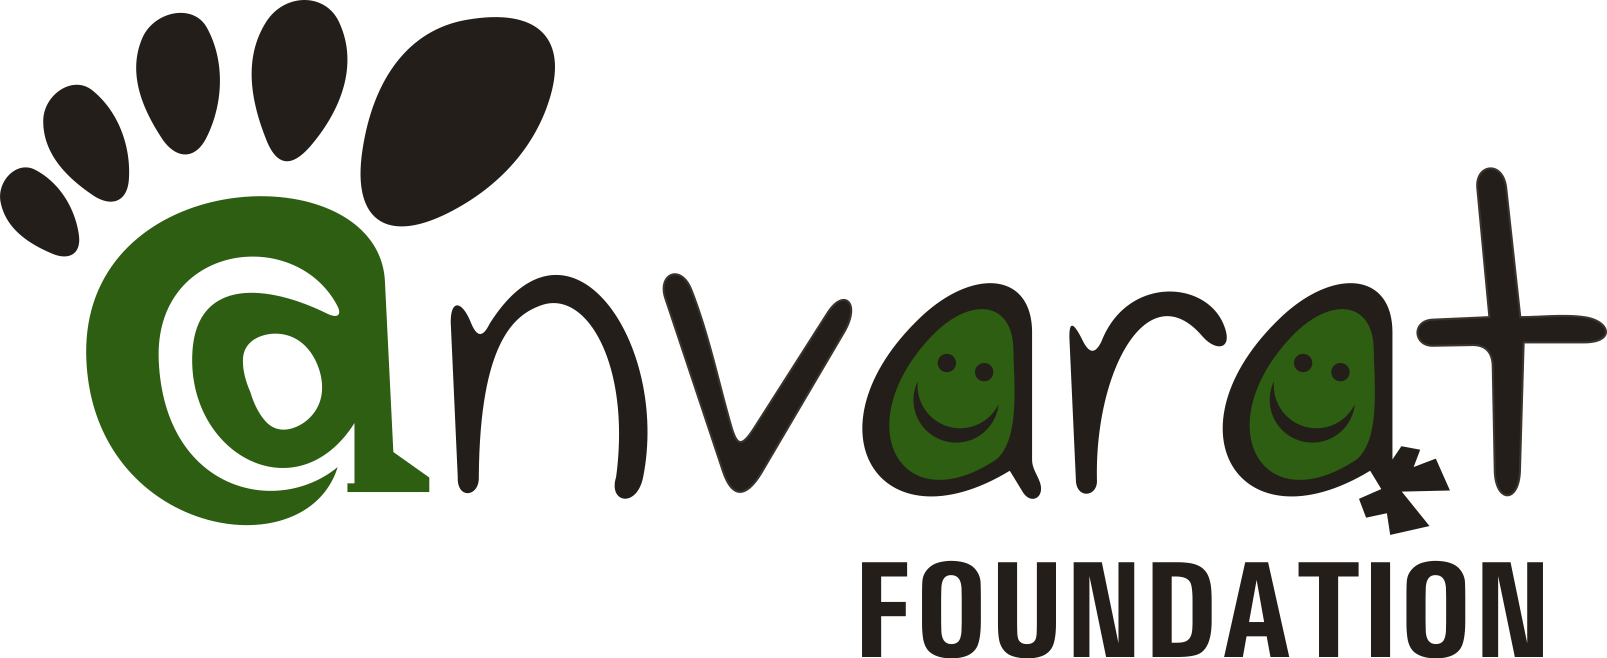 Anvarat Foundtion – Health, Education, and Livelihood